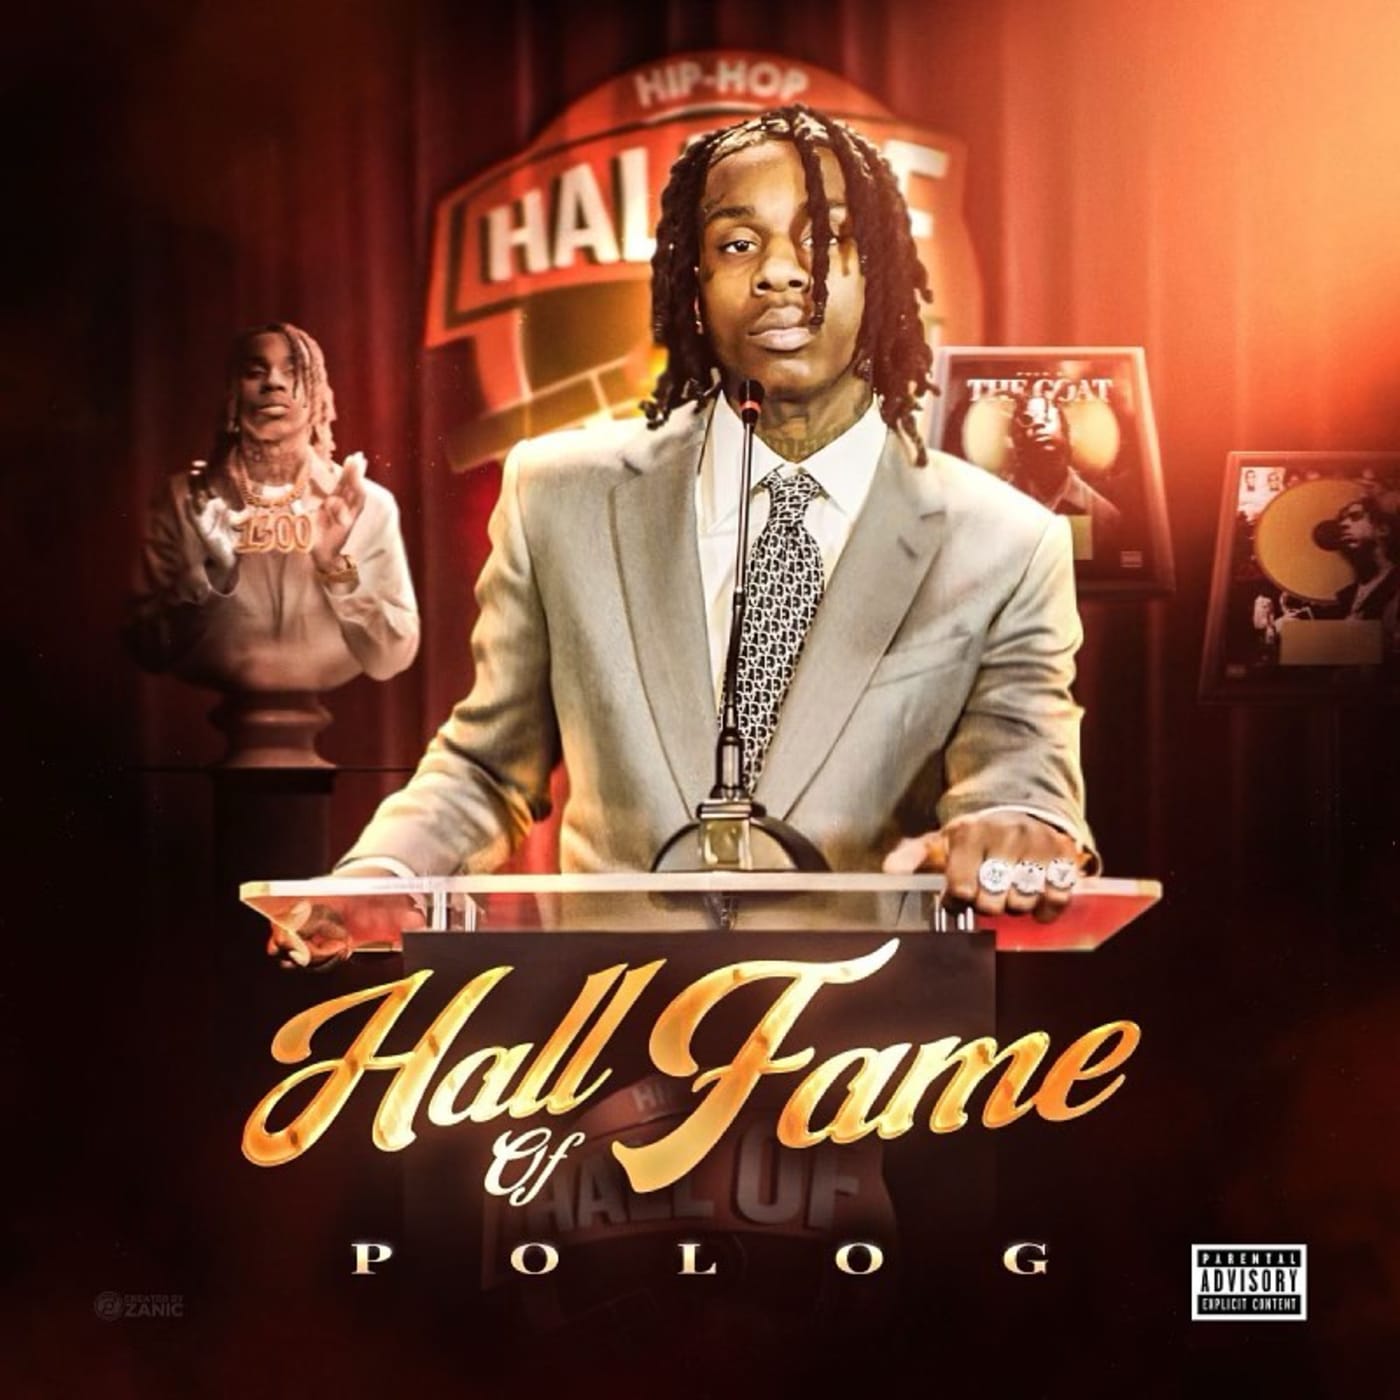 Polo G 'Hall of Fame' album cover.